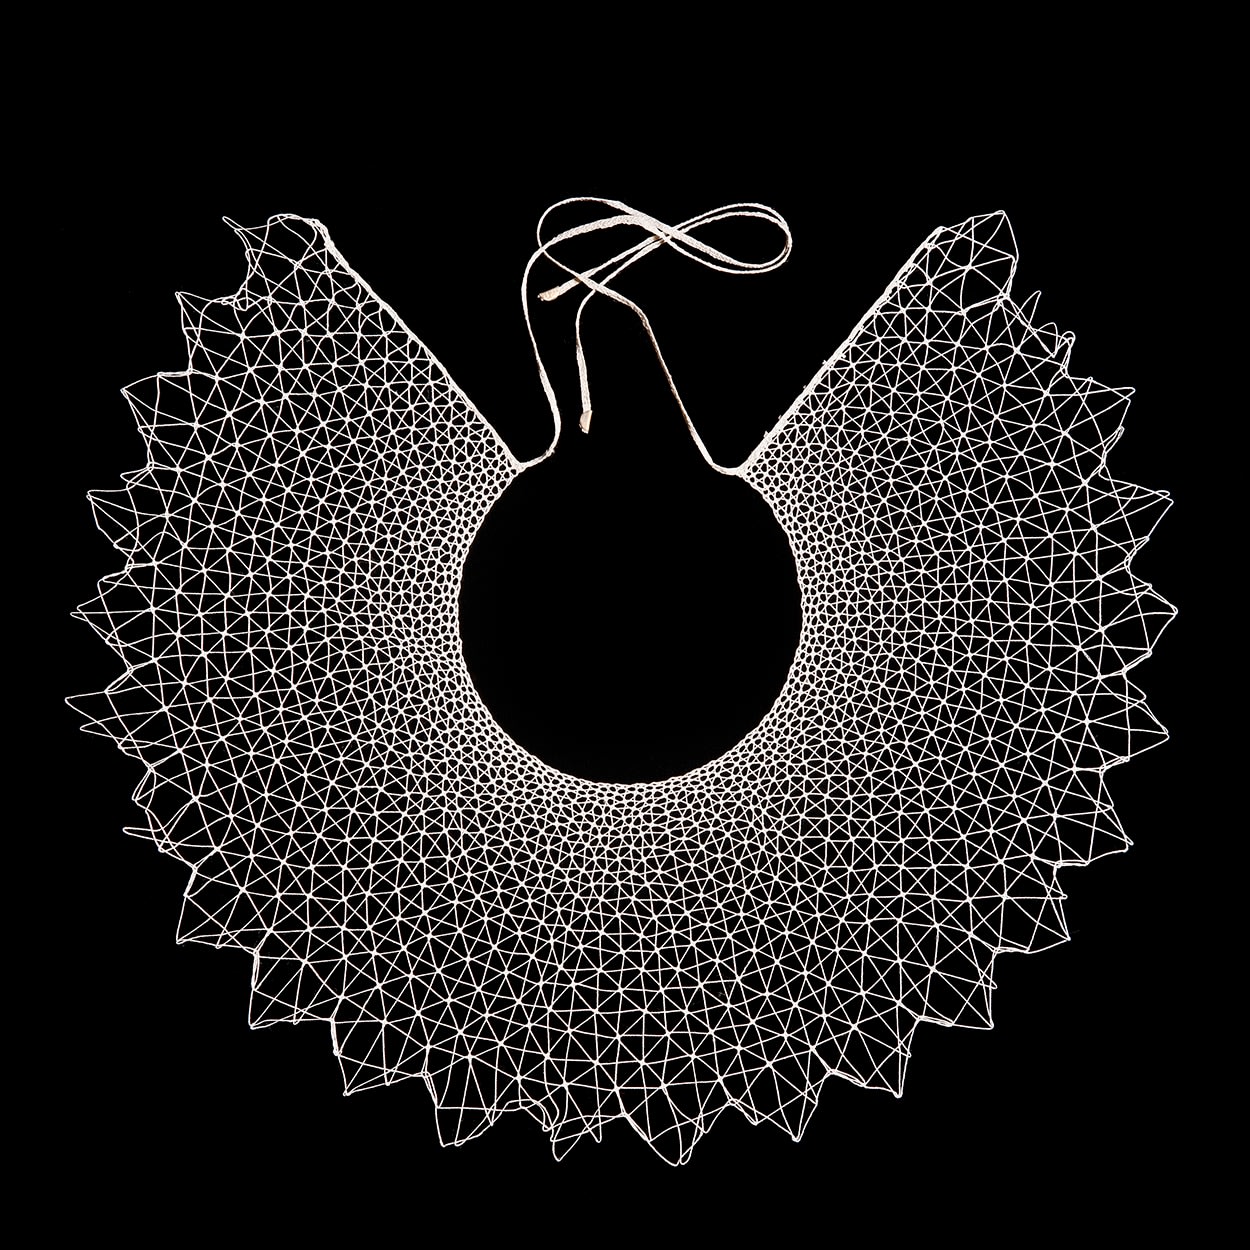 Elinor Carucci RBG collar Ruth Bader Ginsburg Wild lace collar from Johannesburg by artist Kim Lieberman